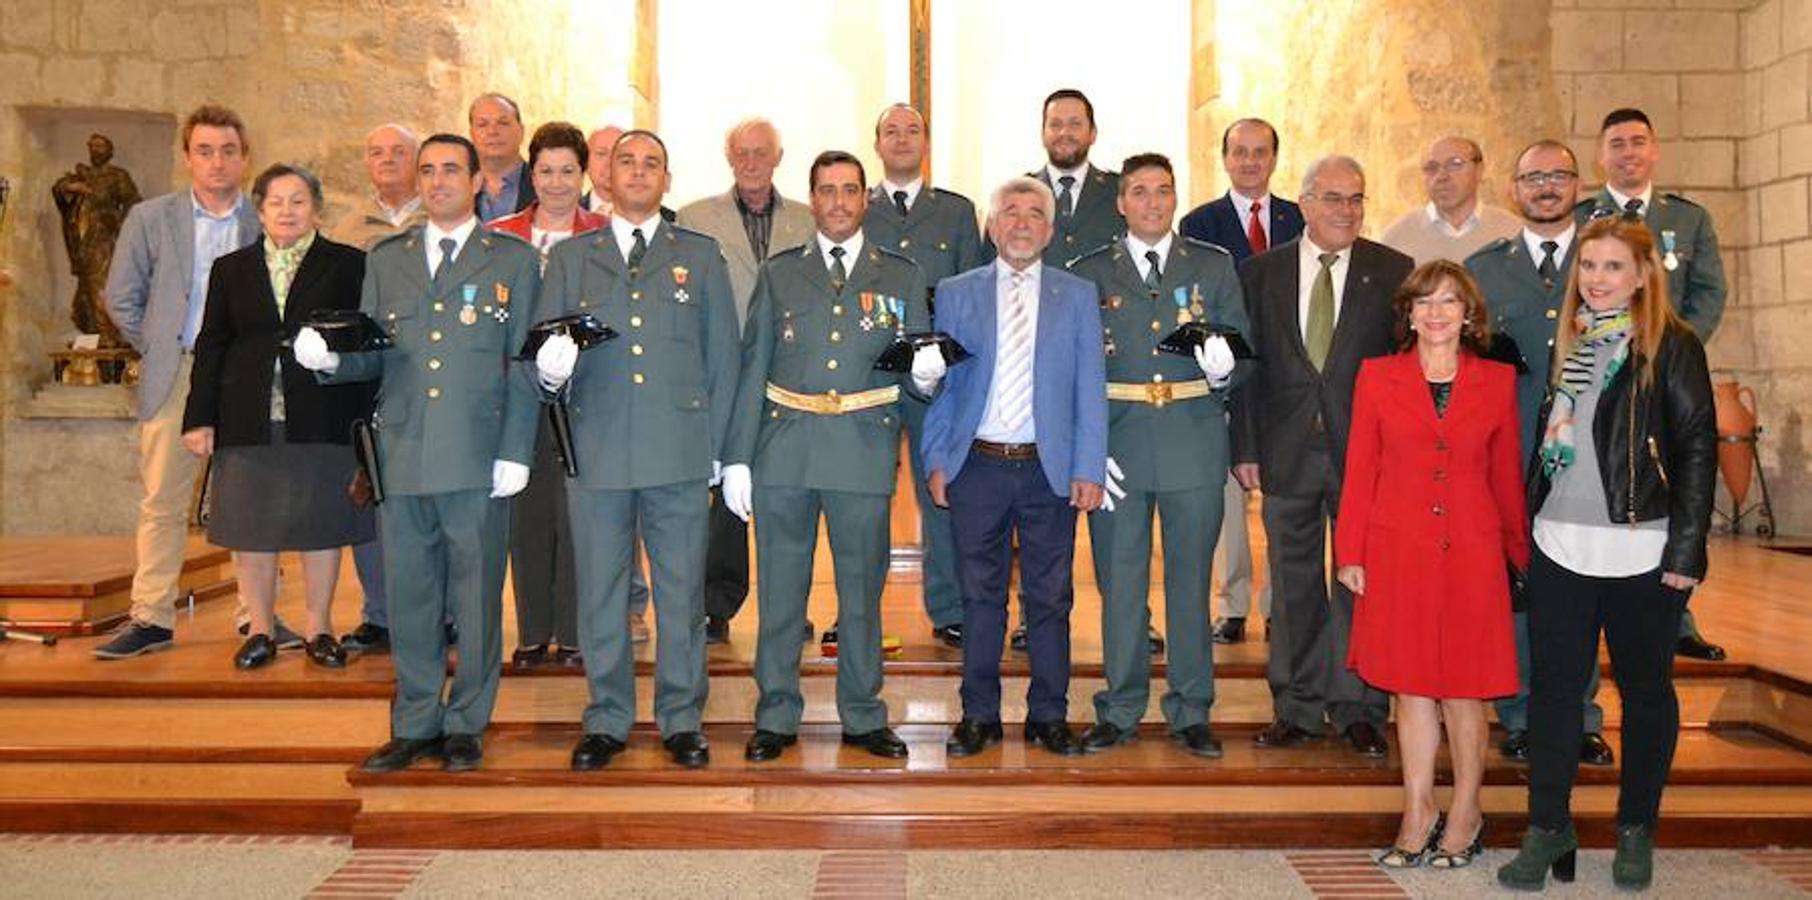 Fotos: La Guardia Civil de la provincia de Palencia celebra su fiesta